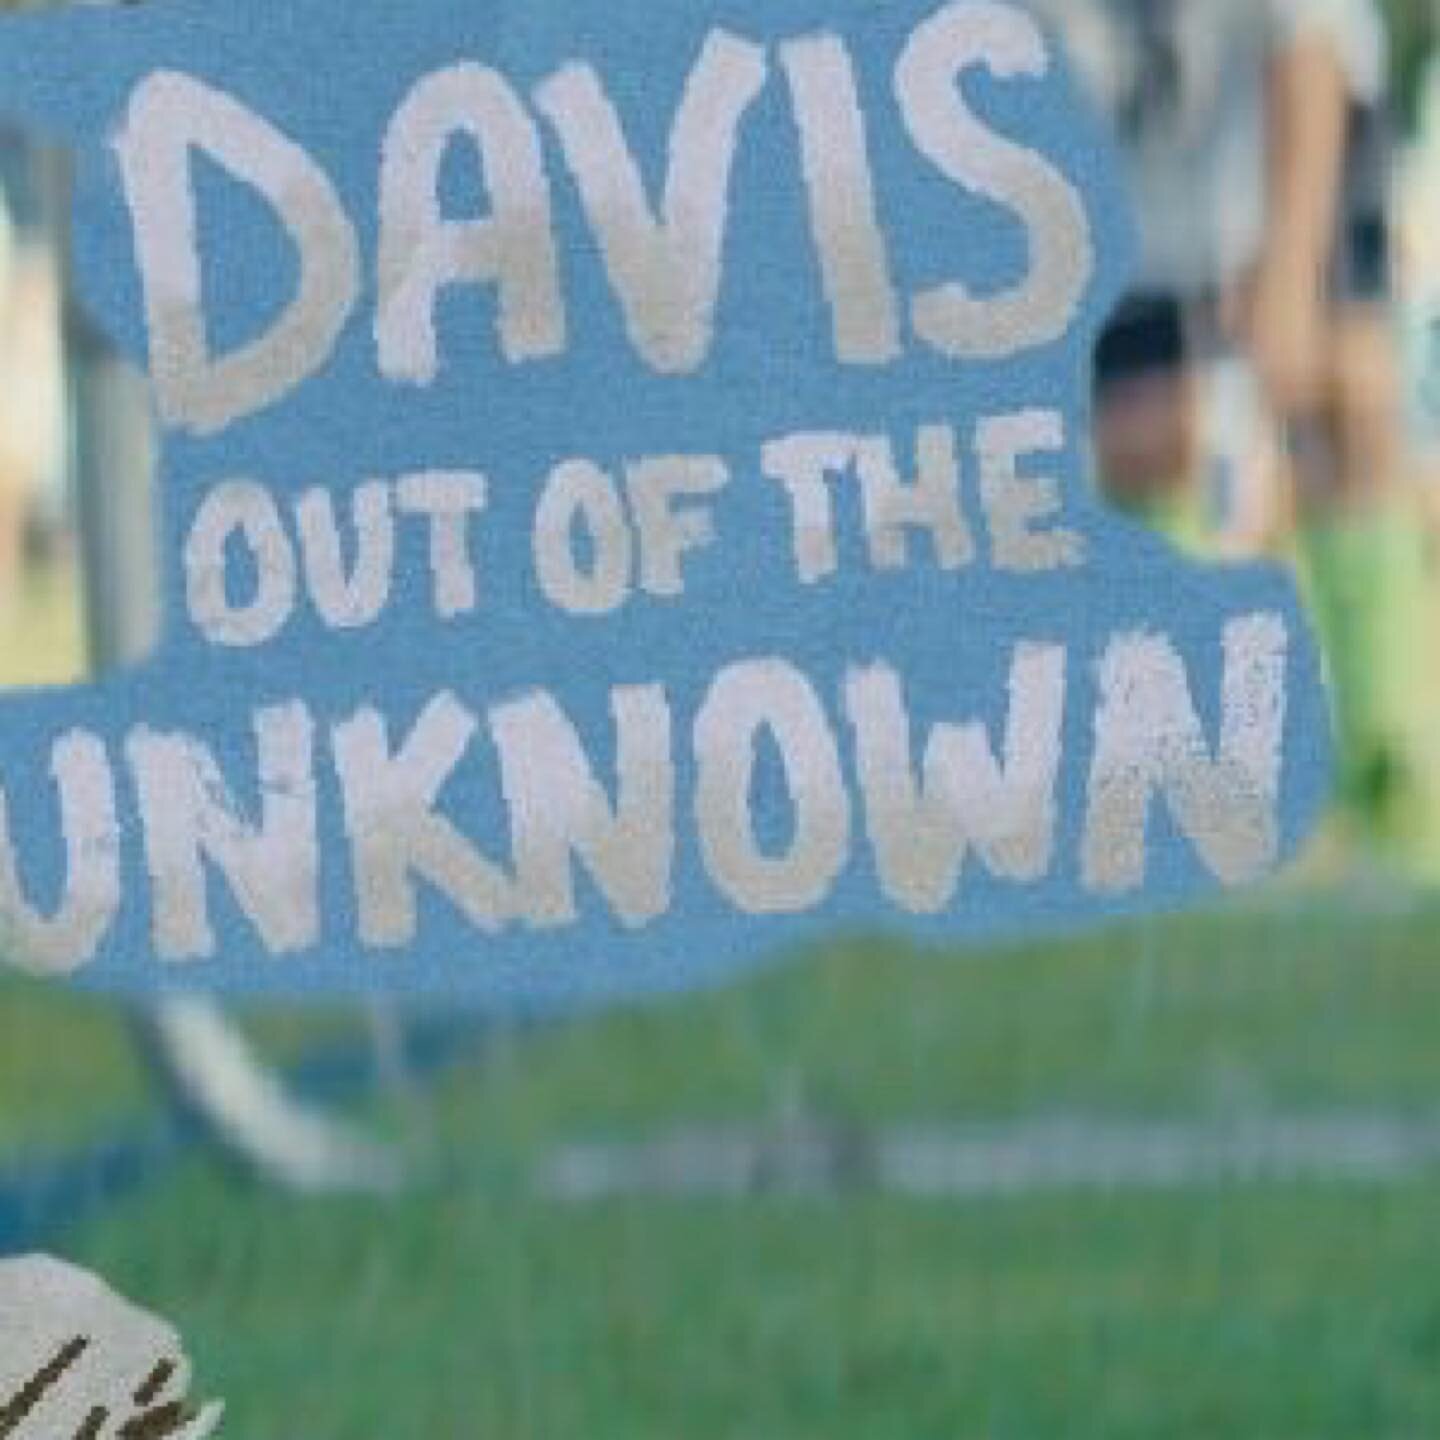 💚

#davisoutoftheunknown #kdvs #koolendevriessyndrome #disorder #youngandlucidmedia #documentary